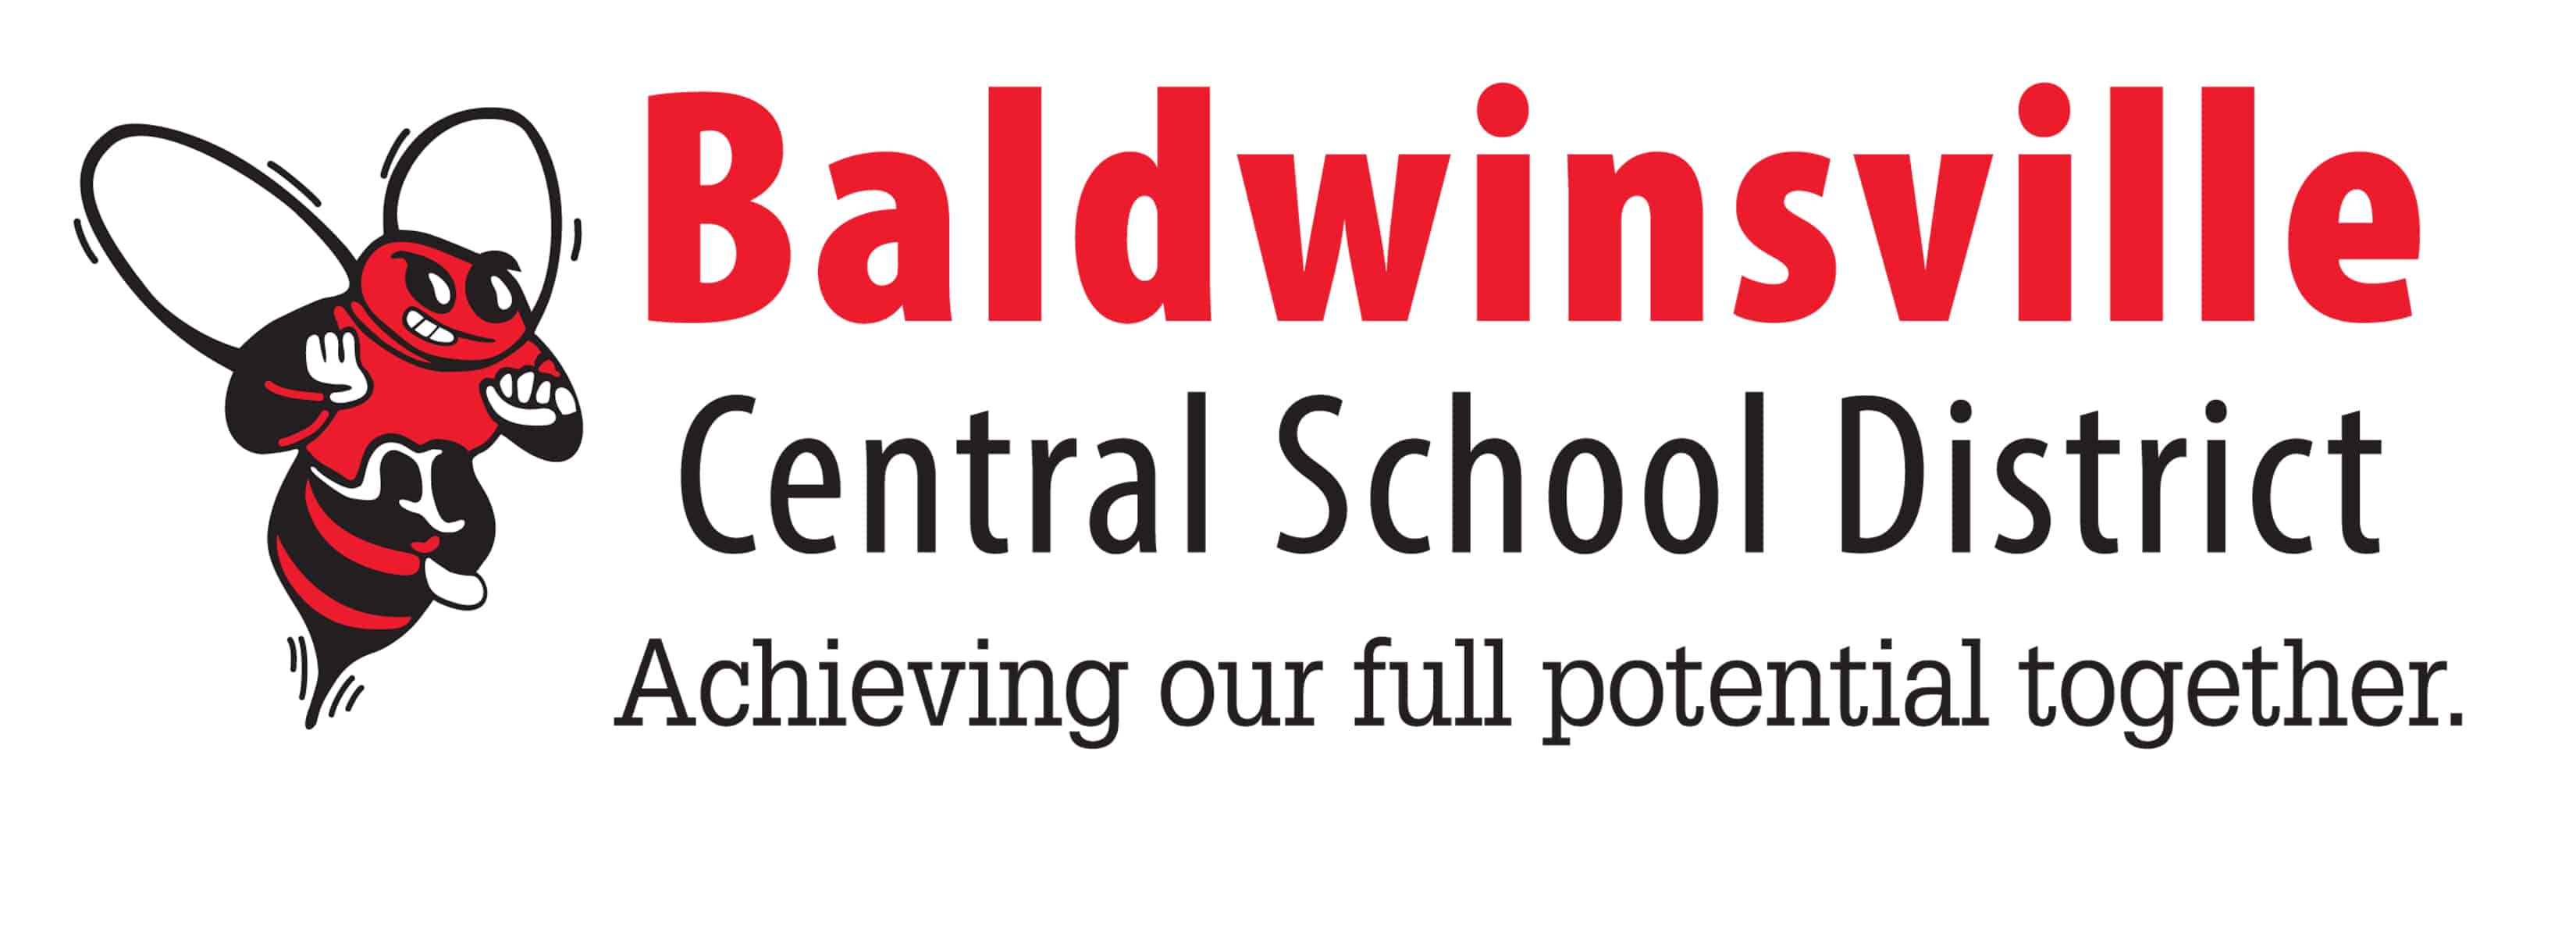 Baldwinsville Central School District logo